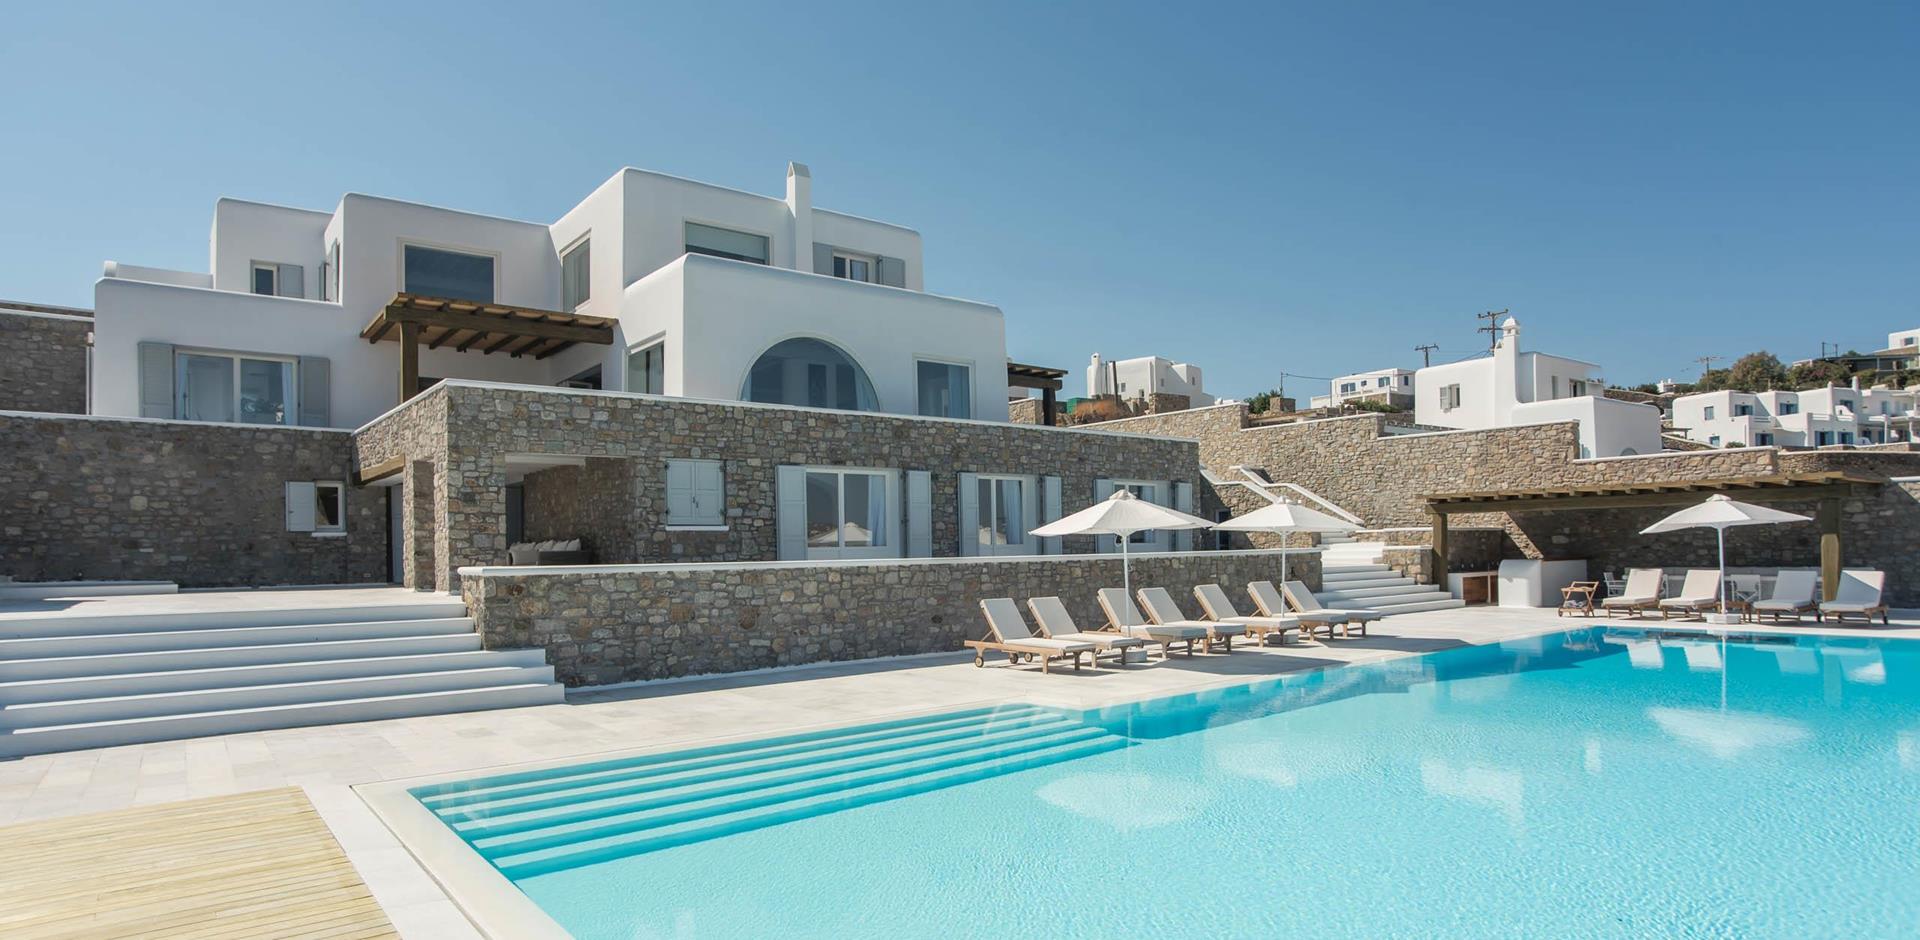 Pool area, Villa Star, Mykonos, Greece, Europe